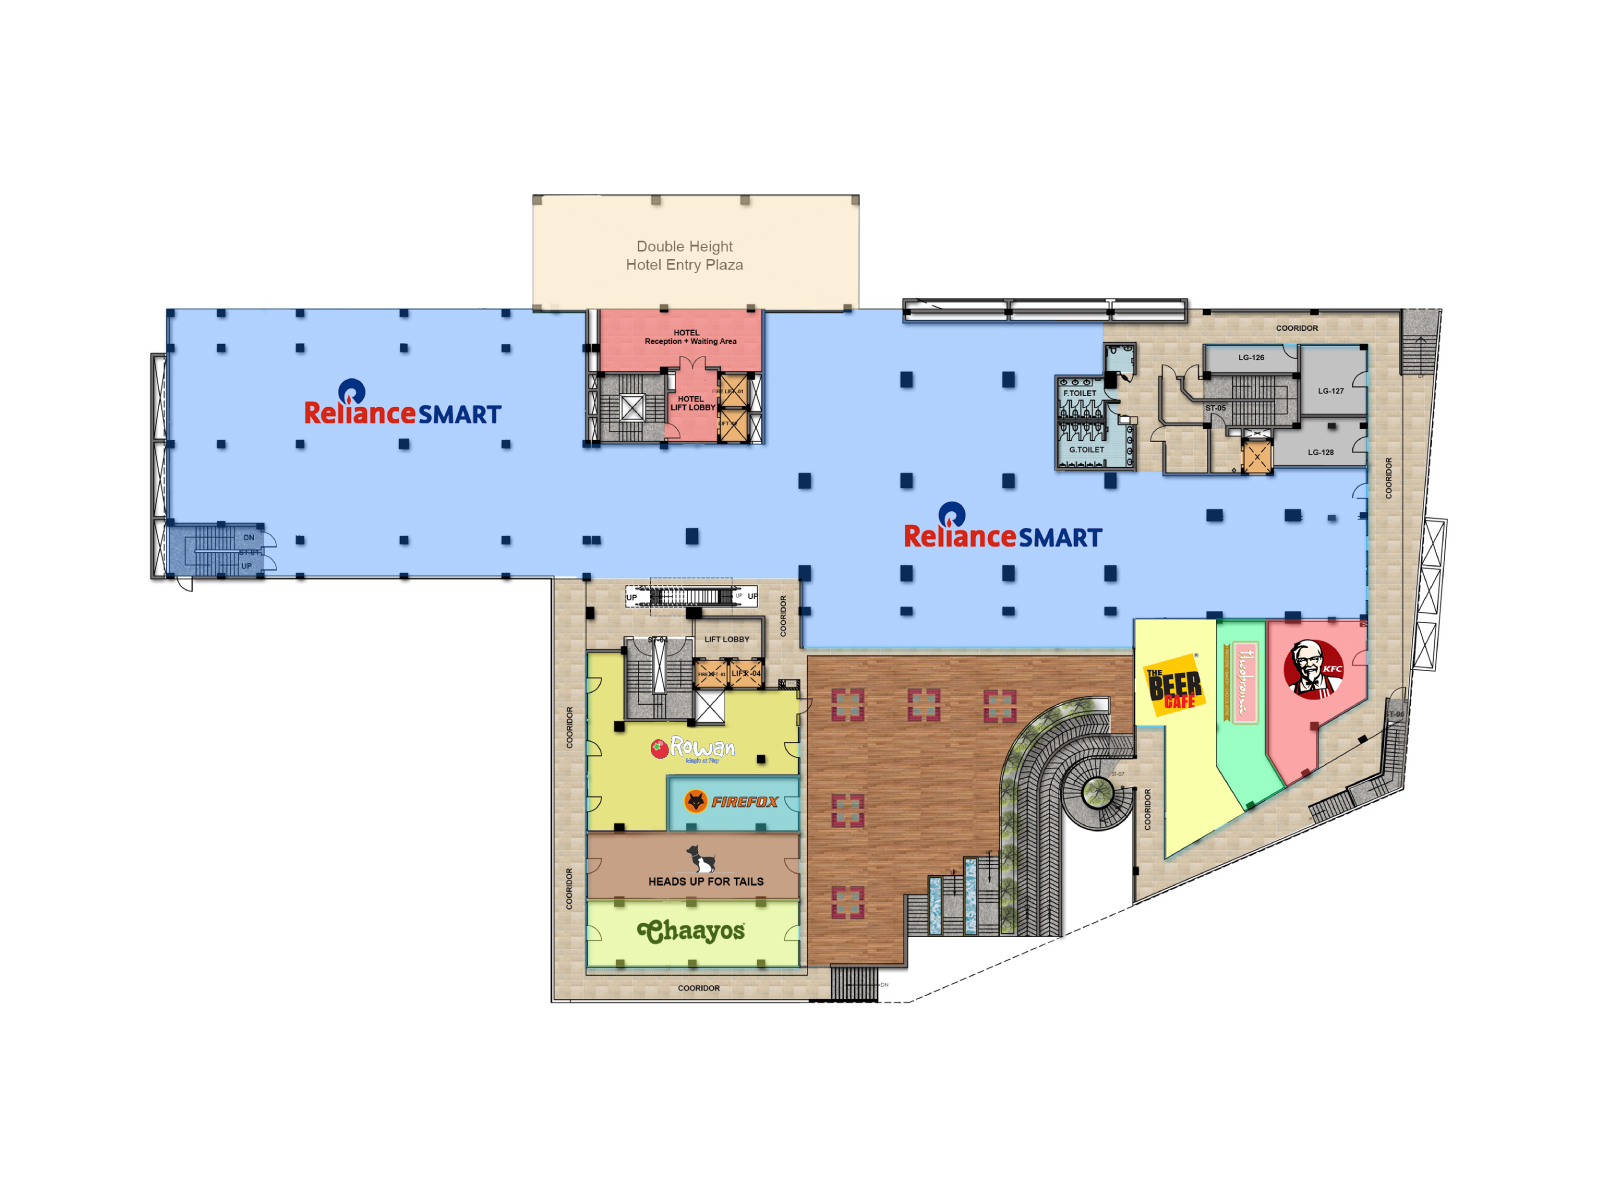 Trehan IRIS Broadway – floor plan of block A, lower ground